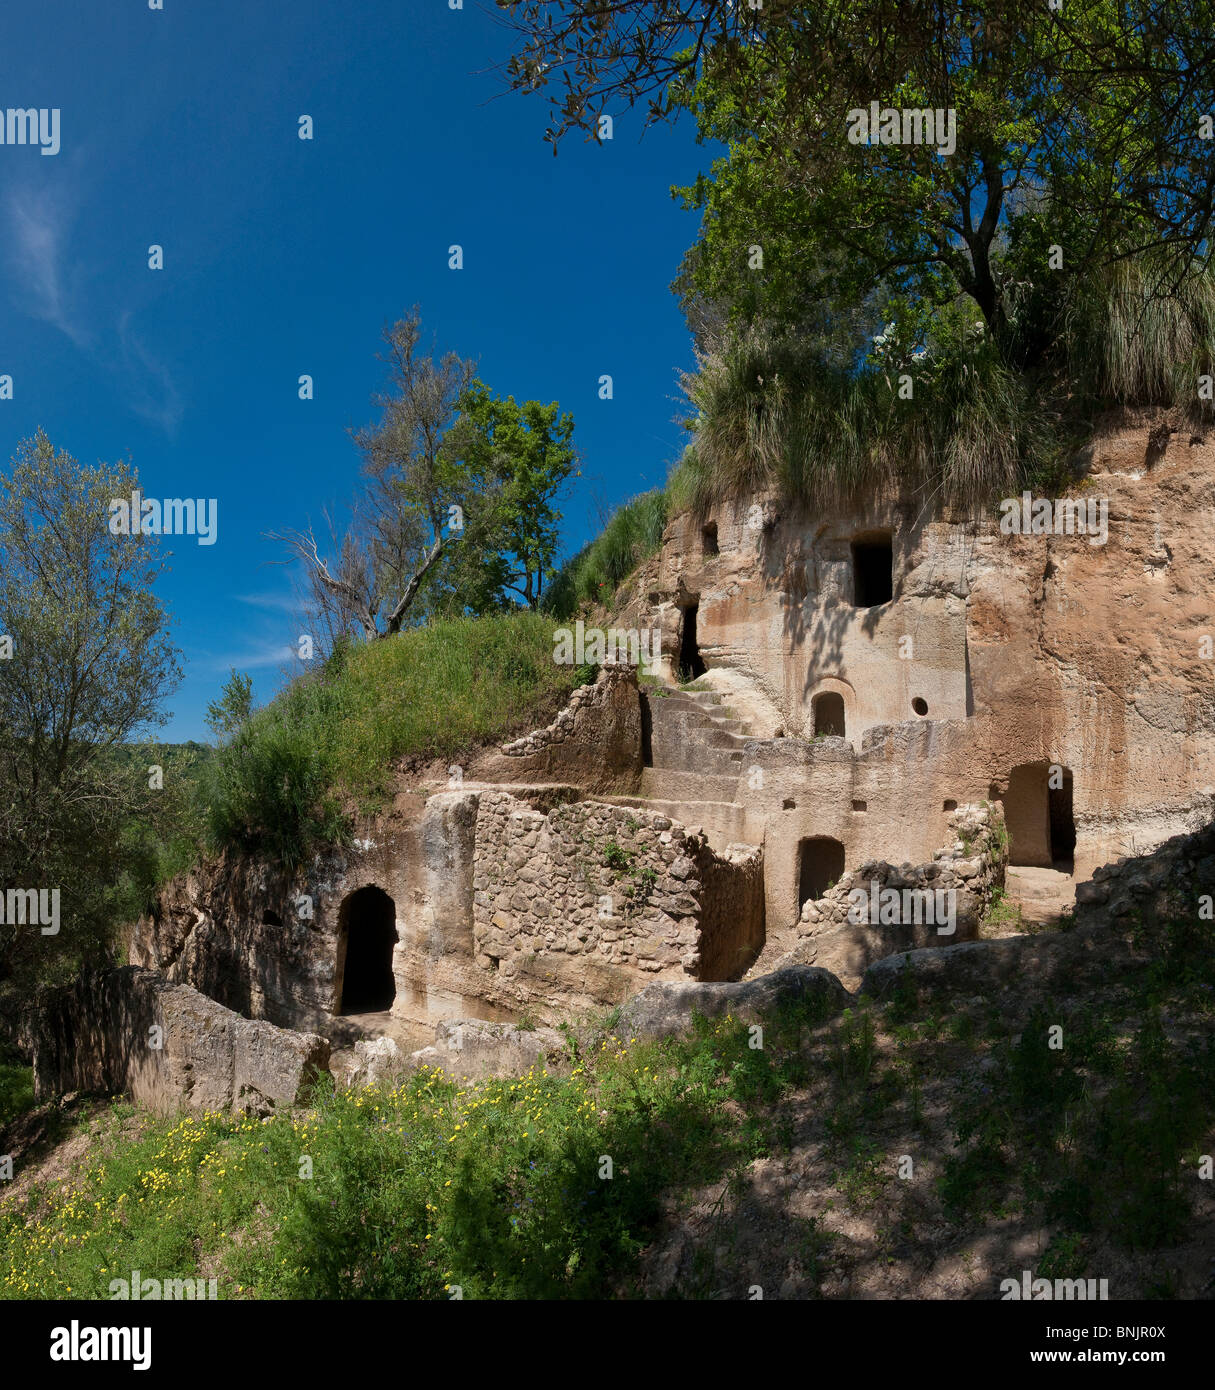 Grotto di Zungri Calabria Mediterranean Italy vegetation trees rocks cliffs cliff apartments cave houses Stock Photo